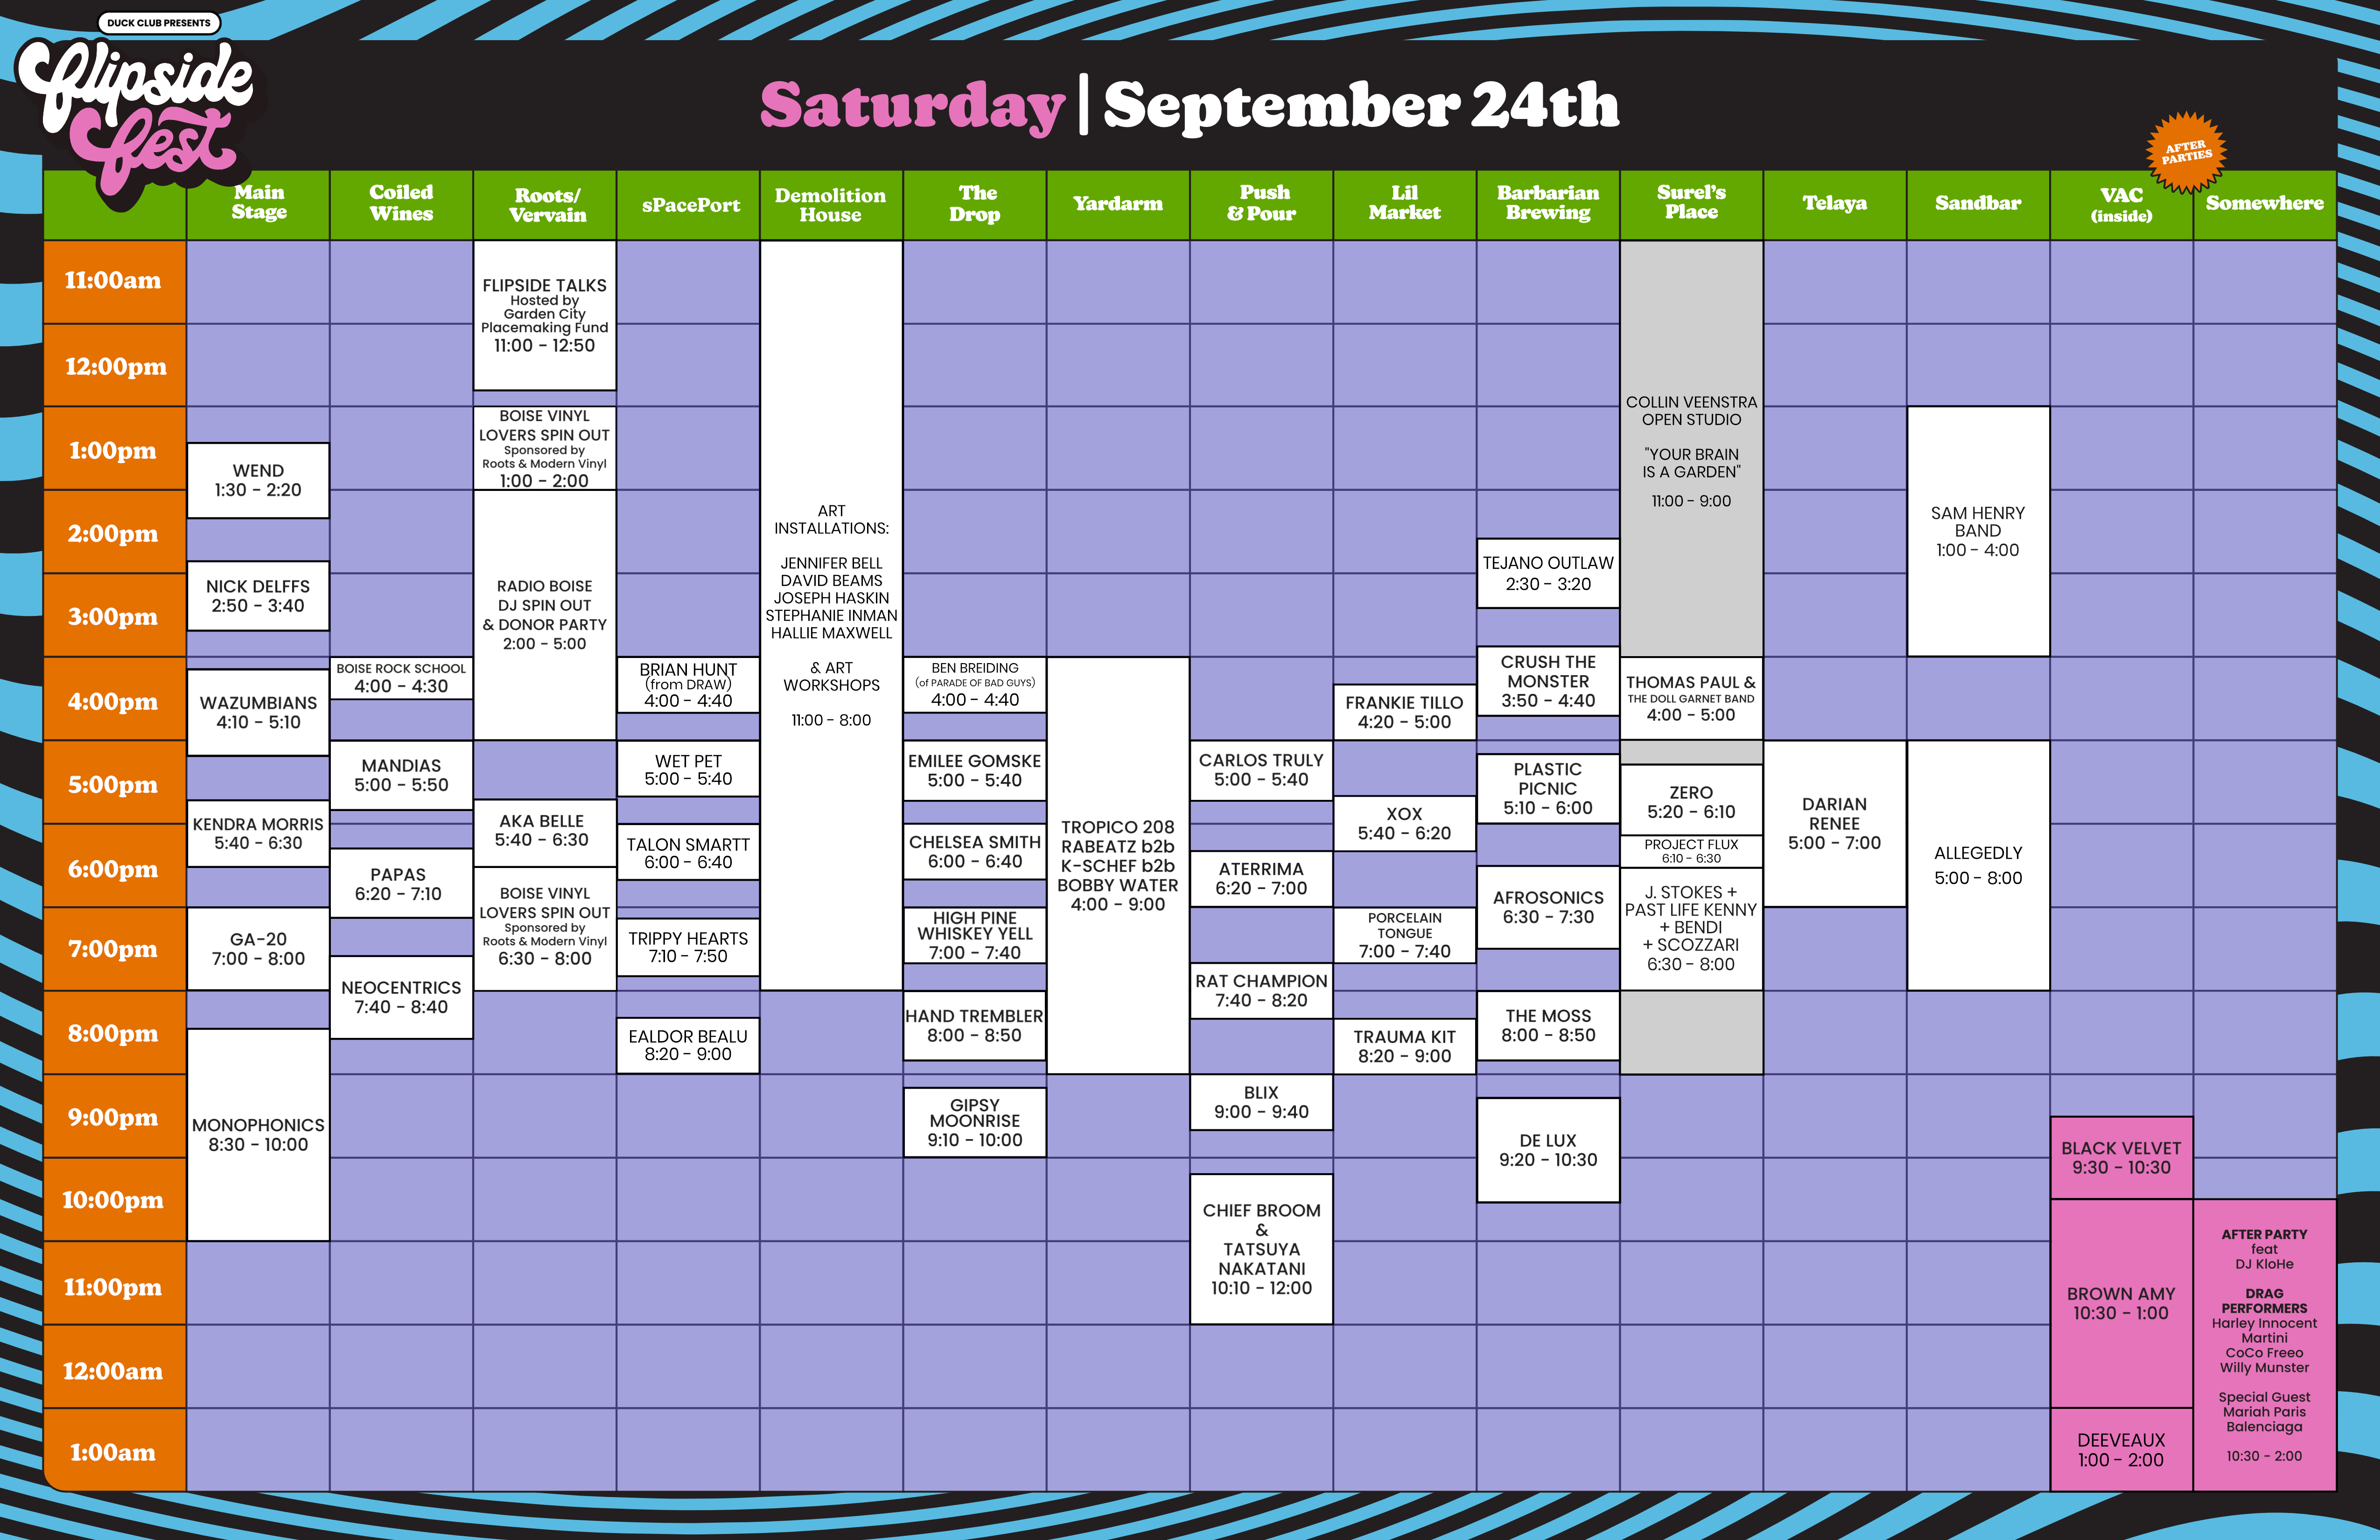 Saturday Flipside Fest Schedule Monophonics, De Lux, GA-20, Brown Amy